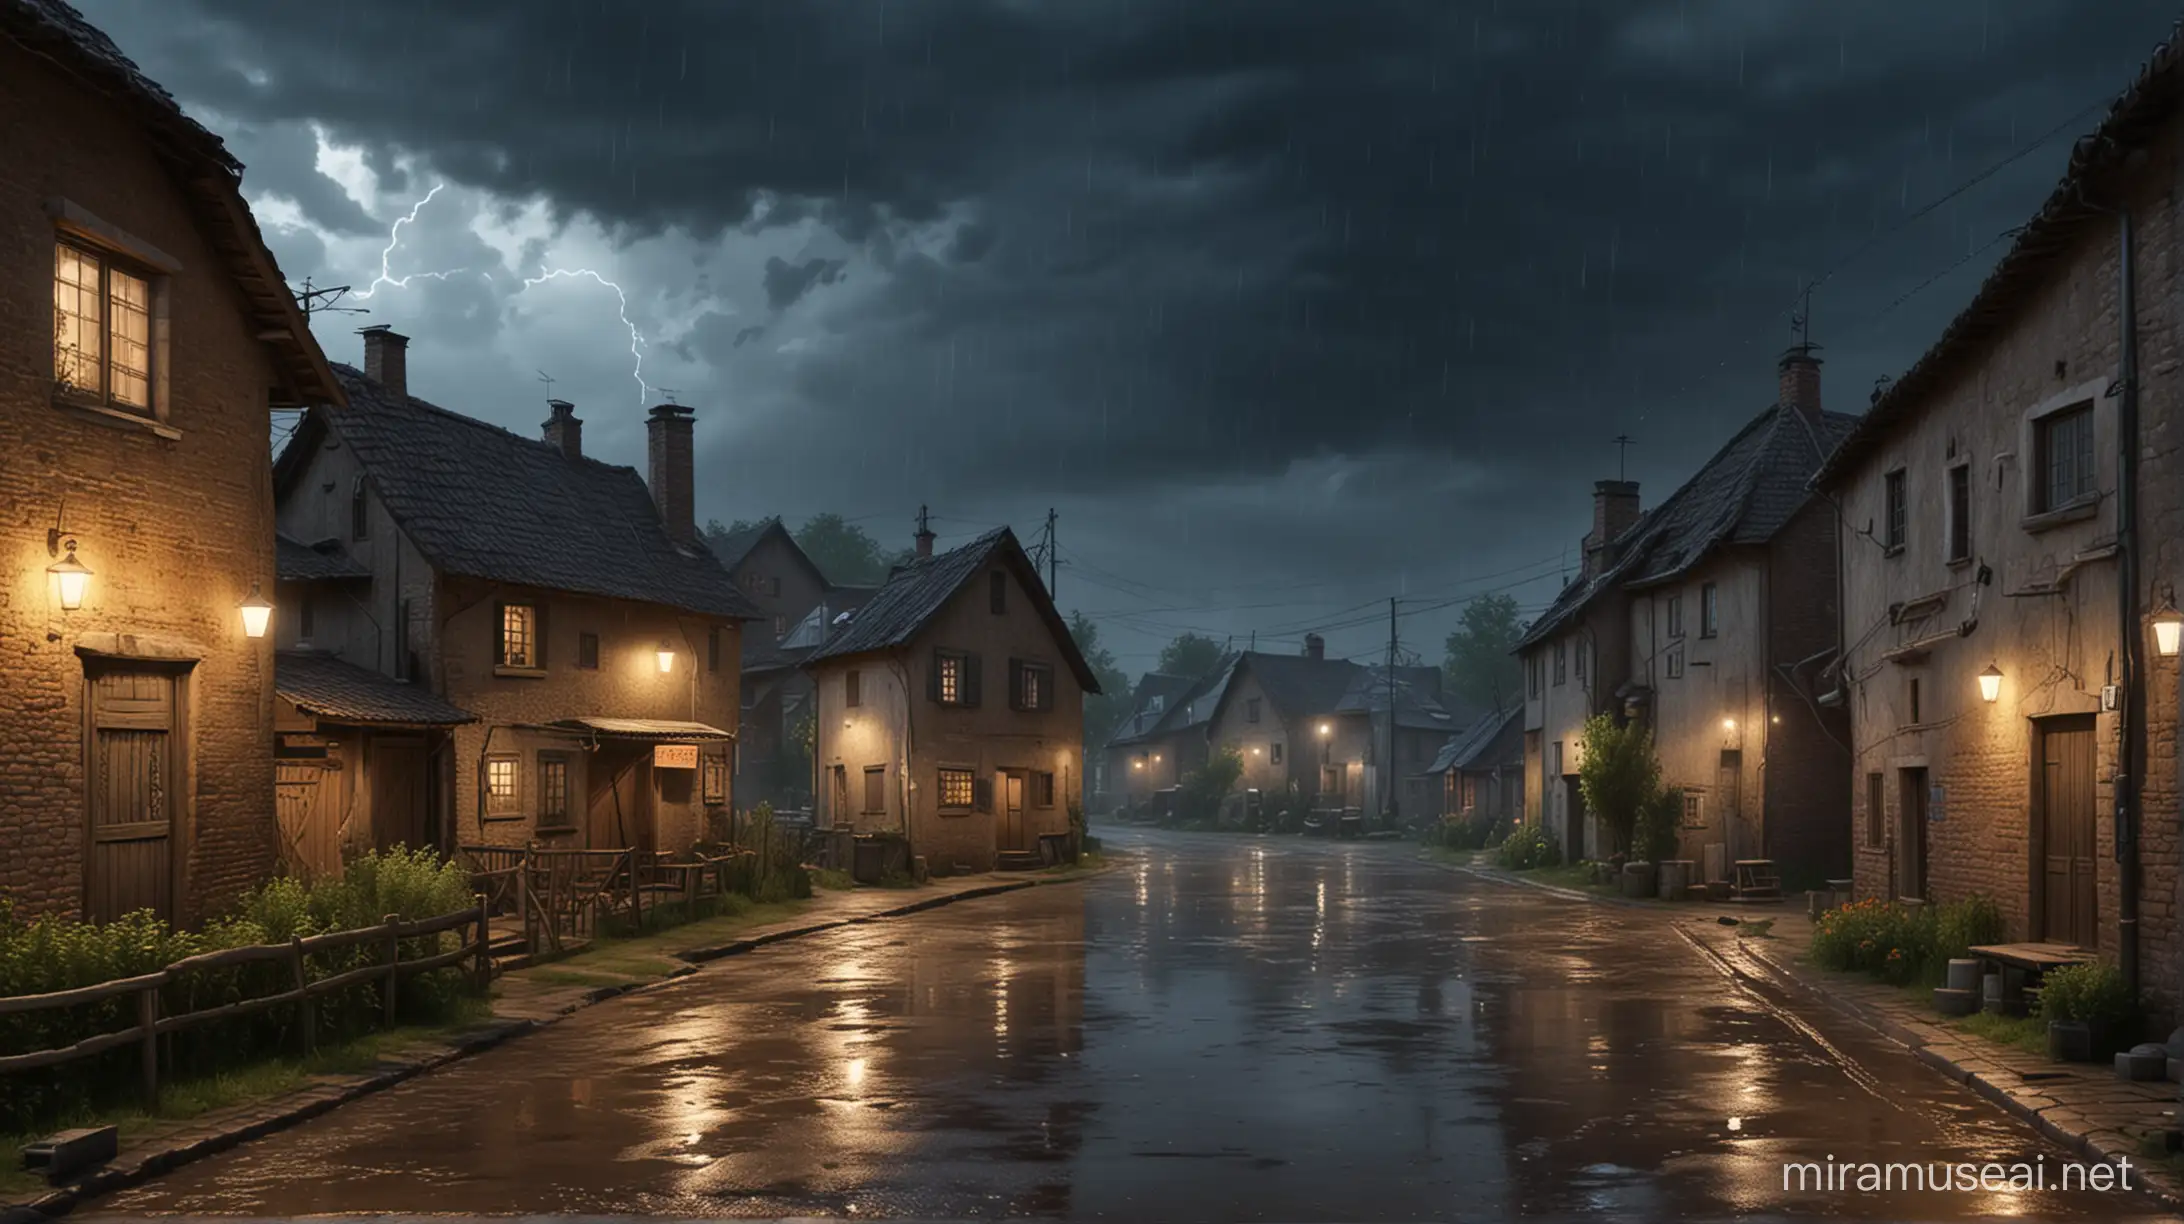 Rainy Night Village Scene with Cloudy Sky